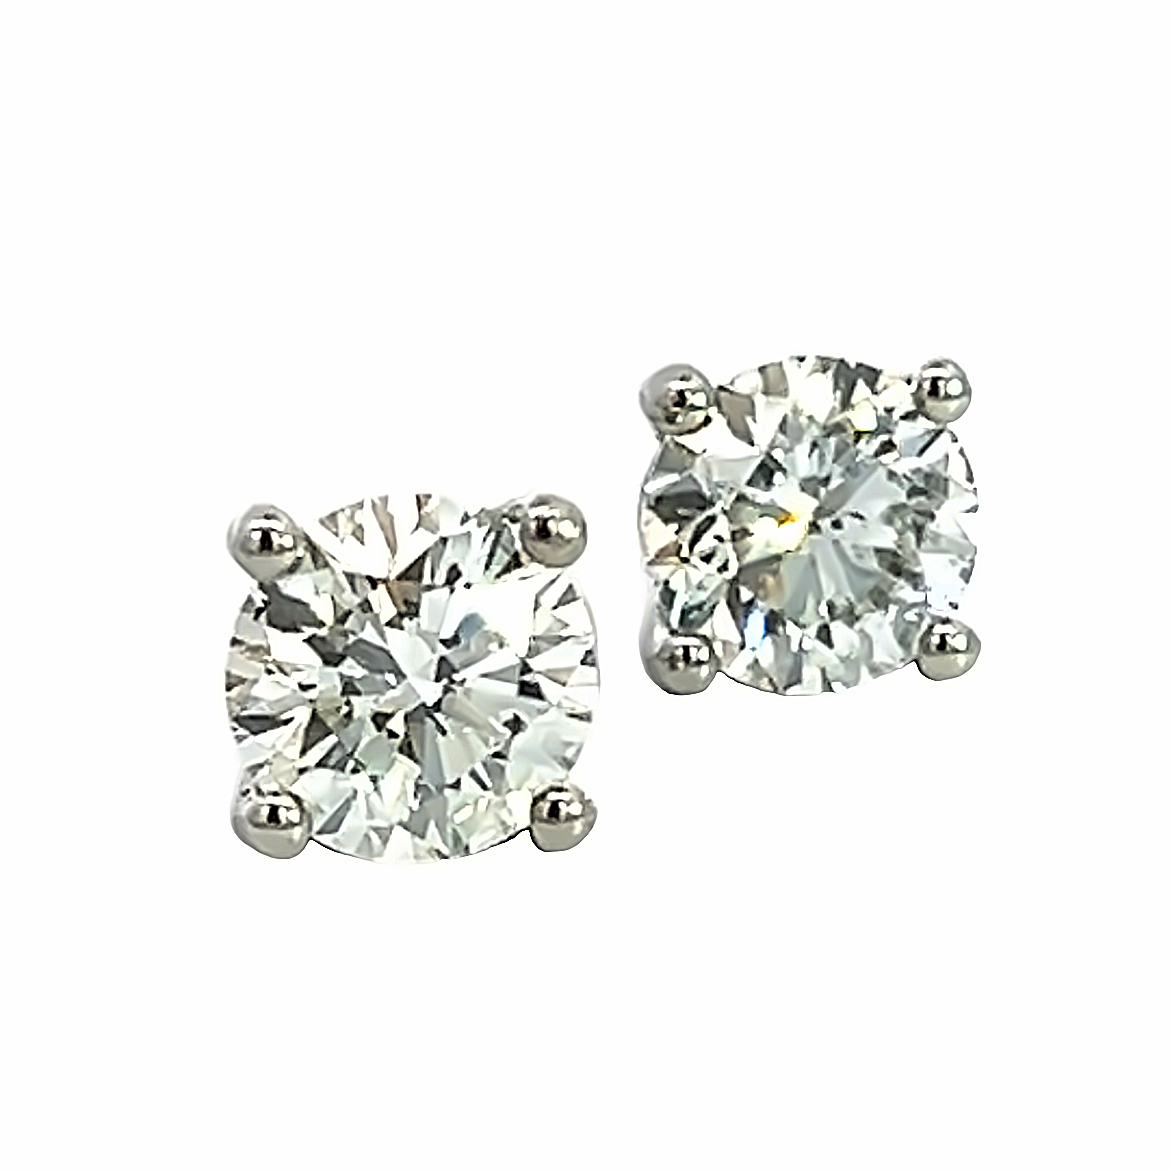 Platinum and Diamond Studs - 3.03 Carats